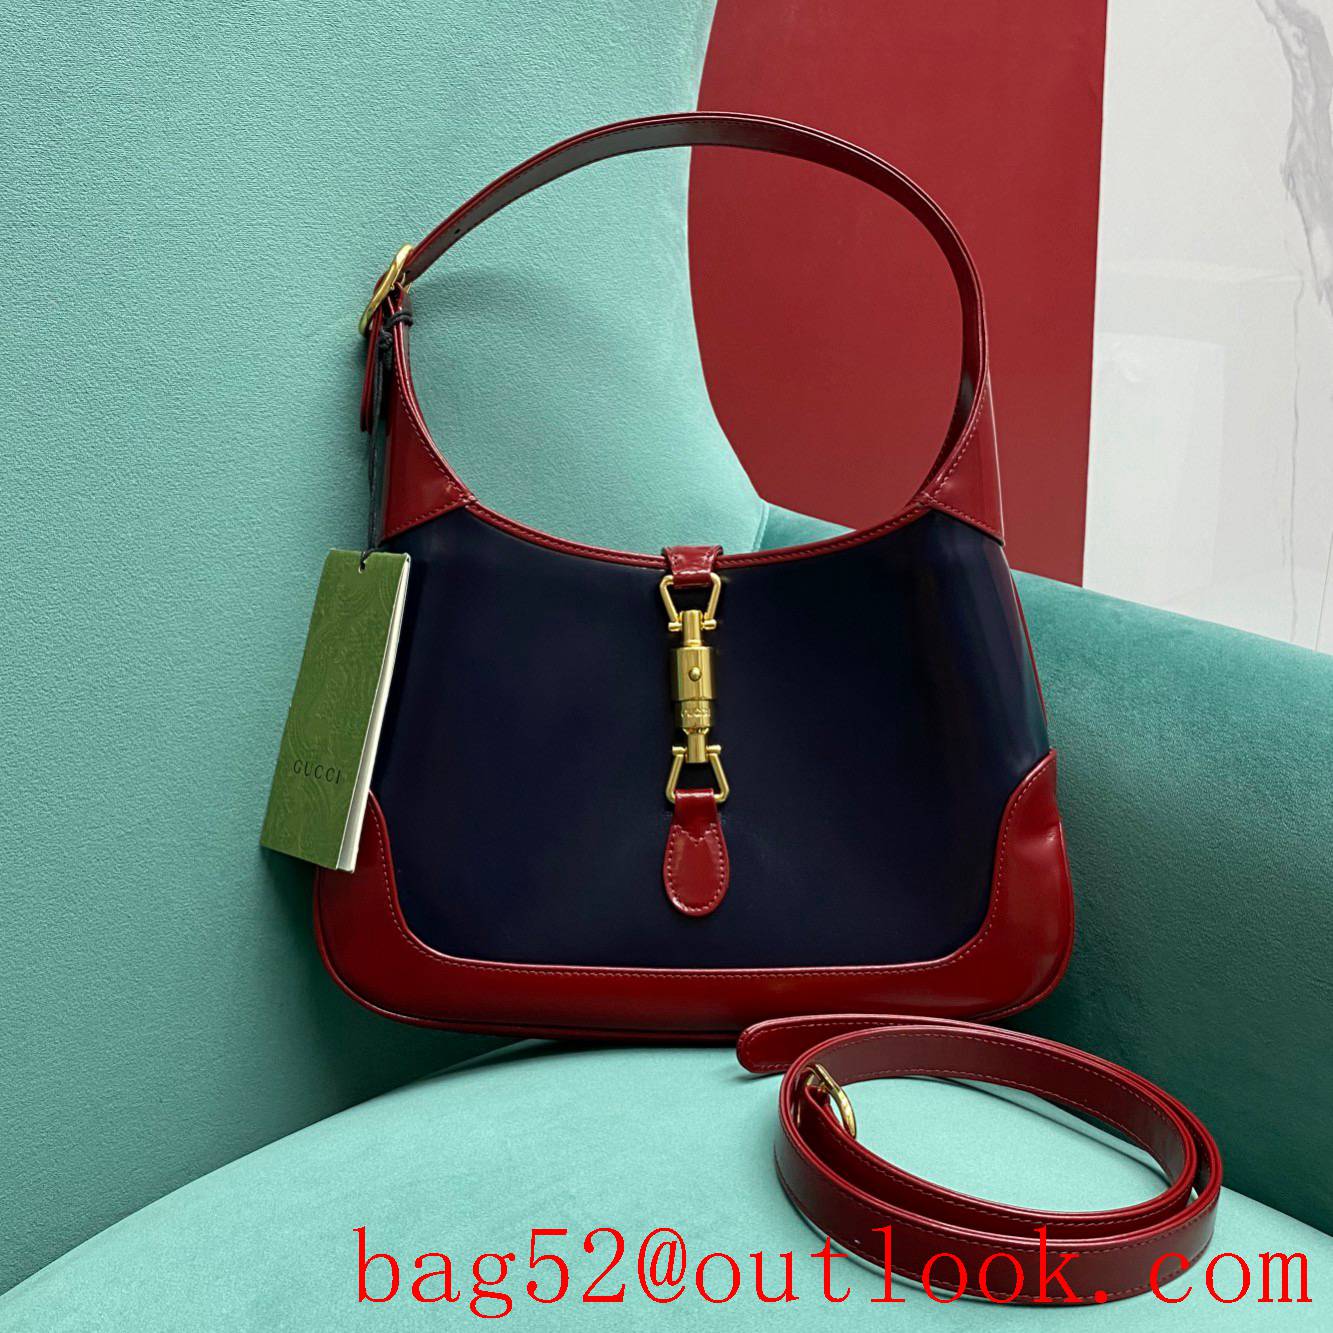 Gucci Jackie 1961 navy blue with red medium shoiulder crossbody handbag